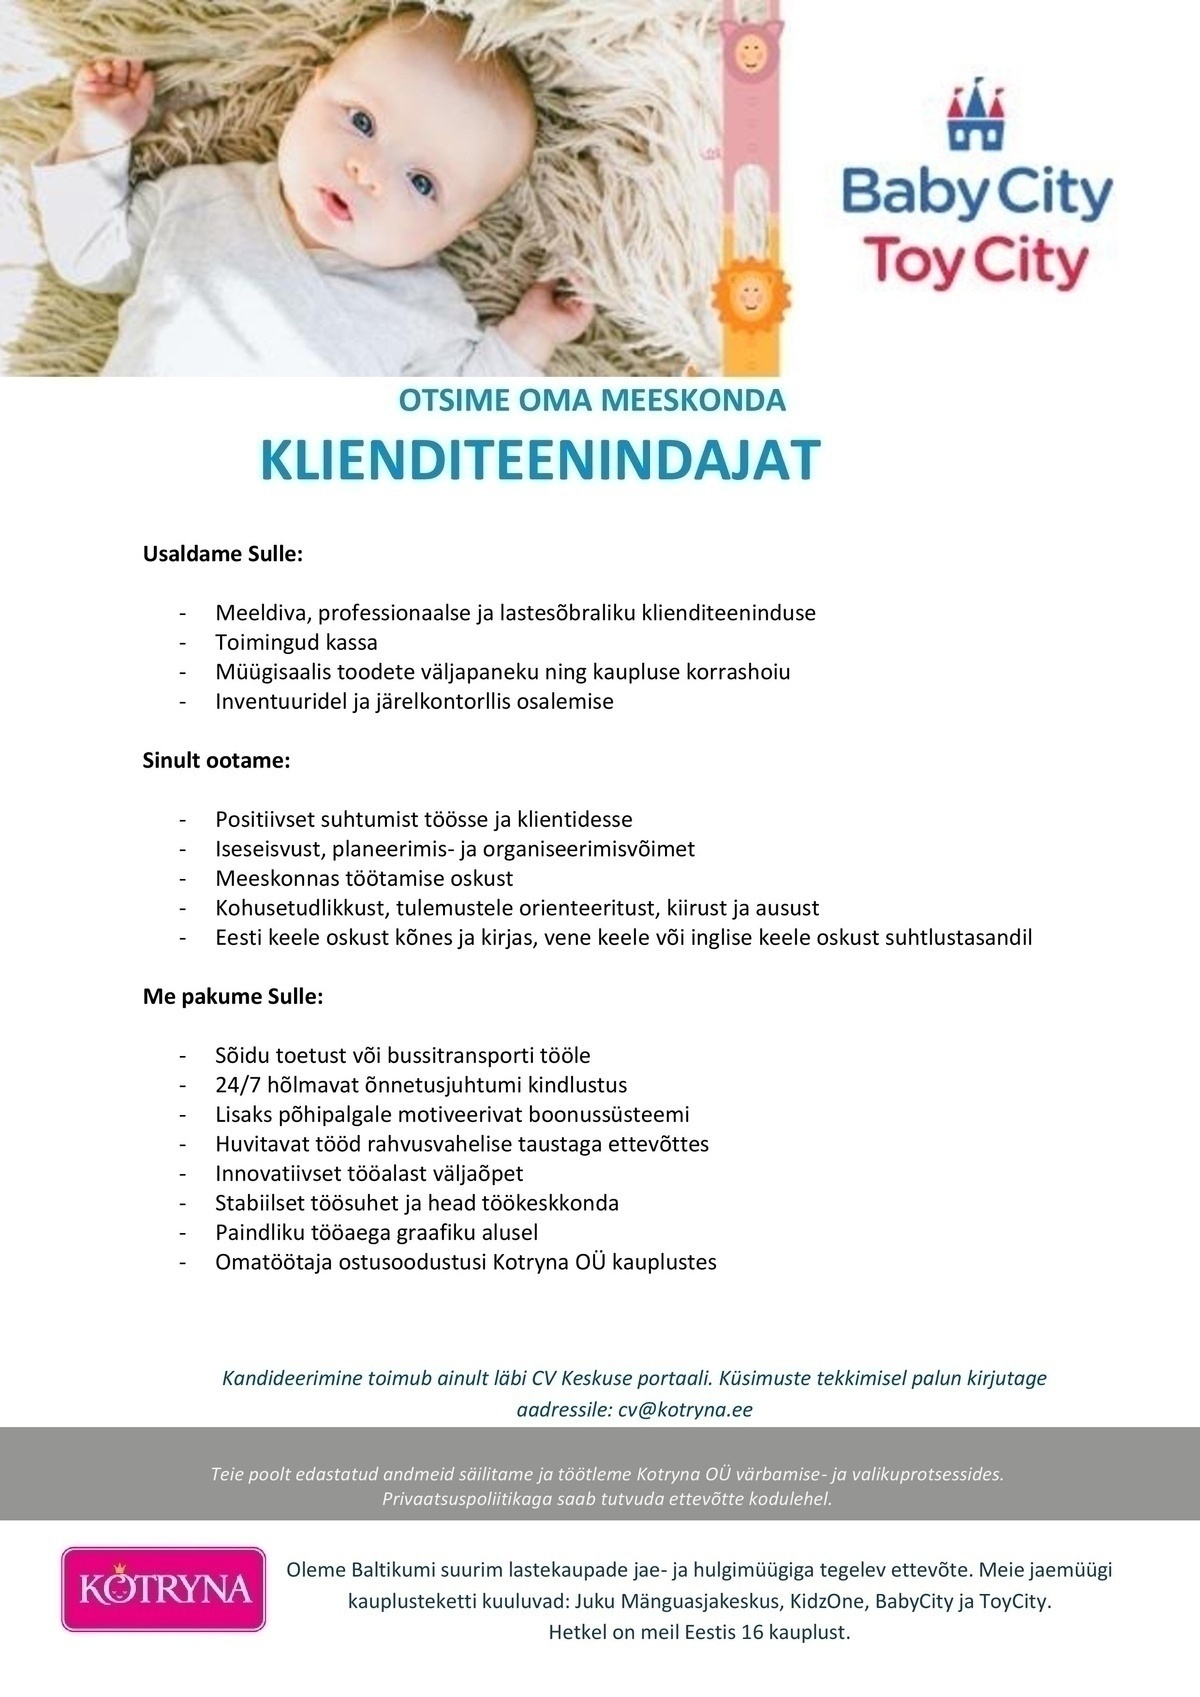 Kotryna OÜ Klienditeenindaja BabyCity/ToyCity Kurna